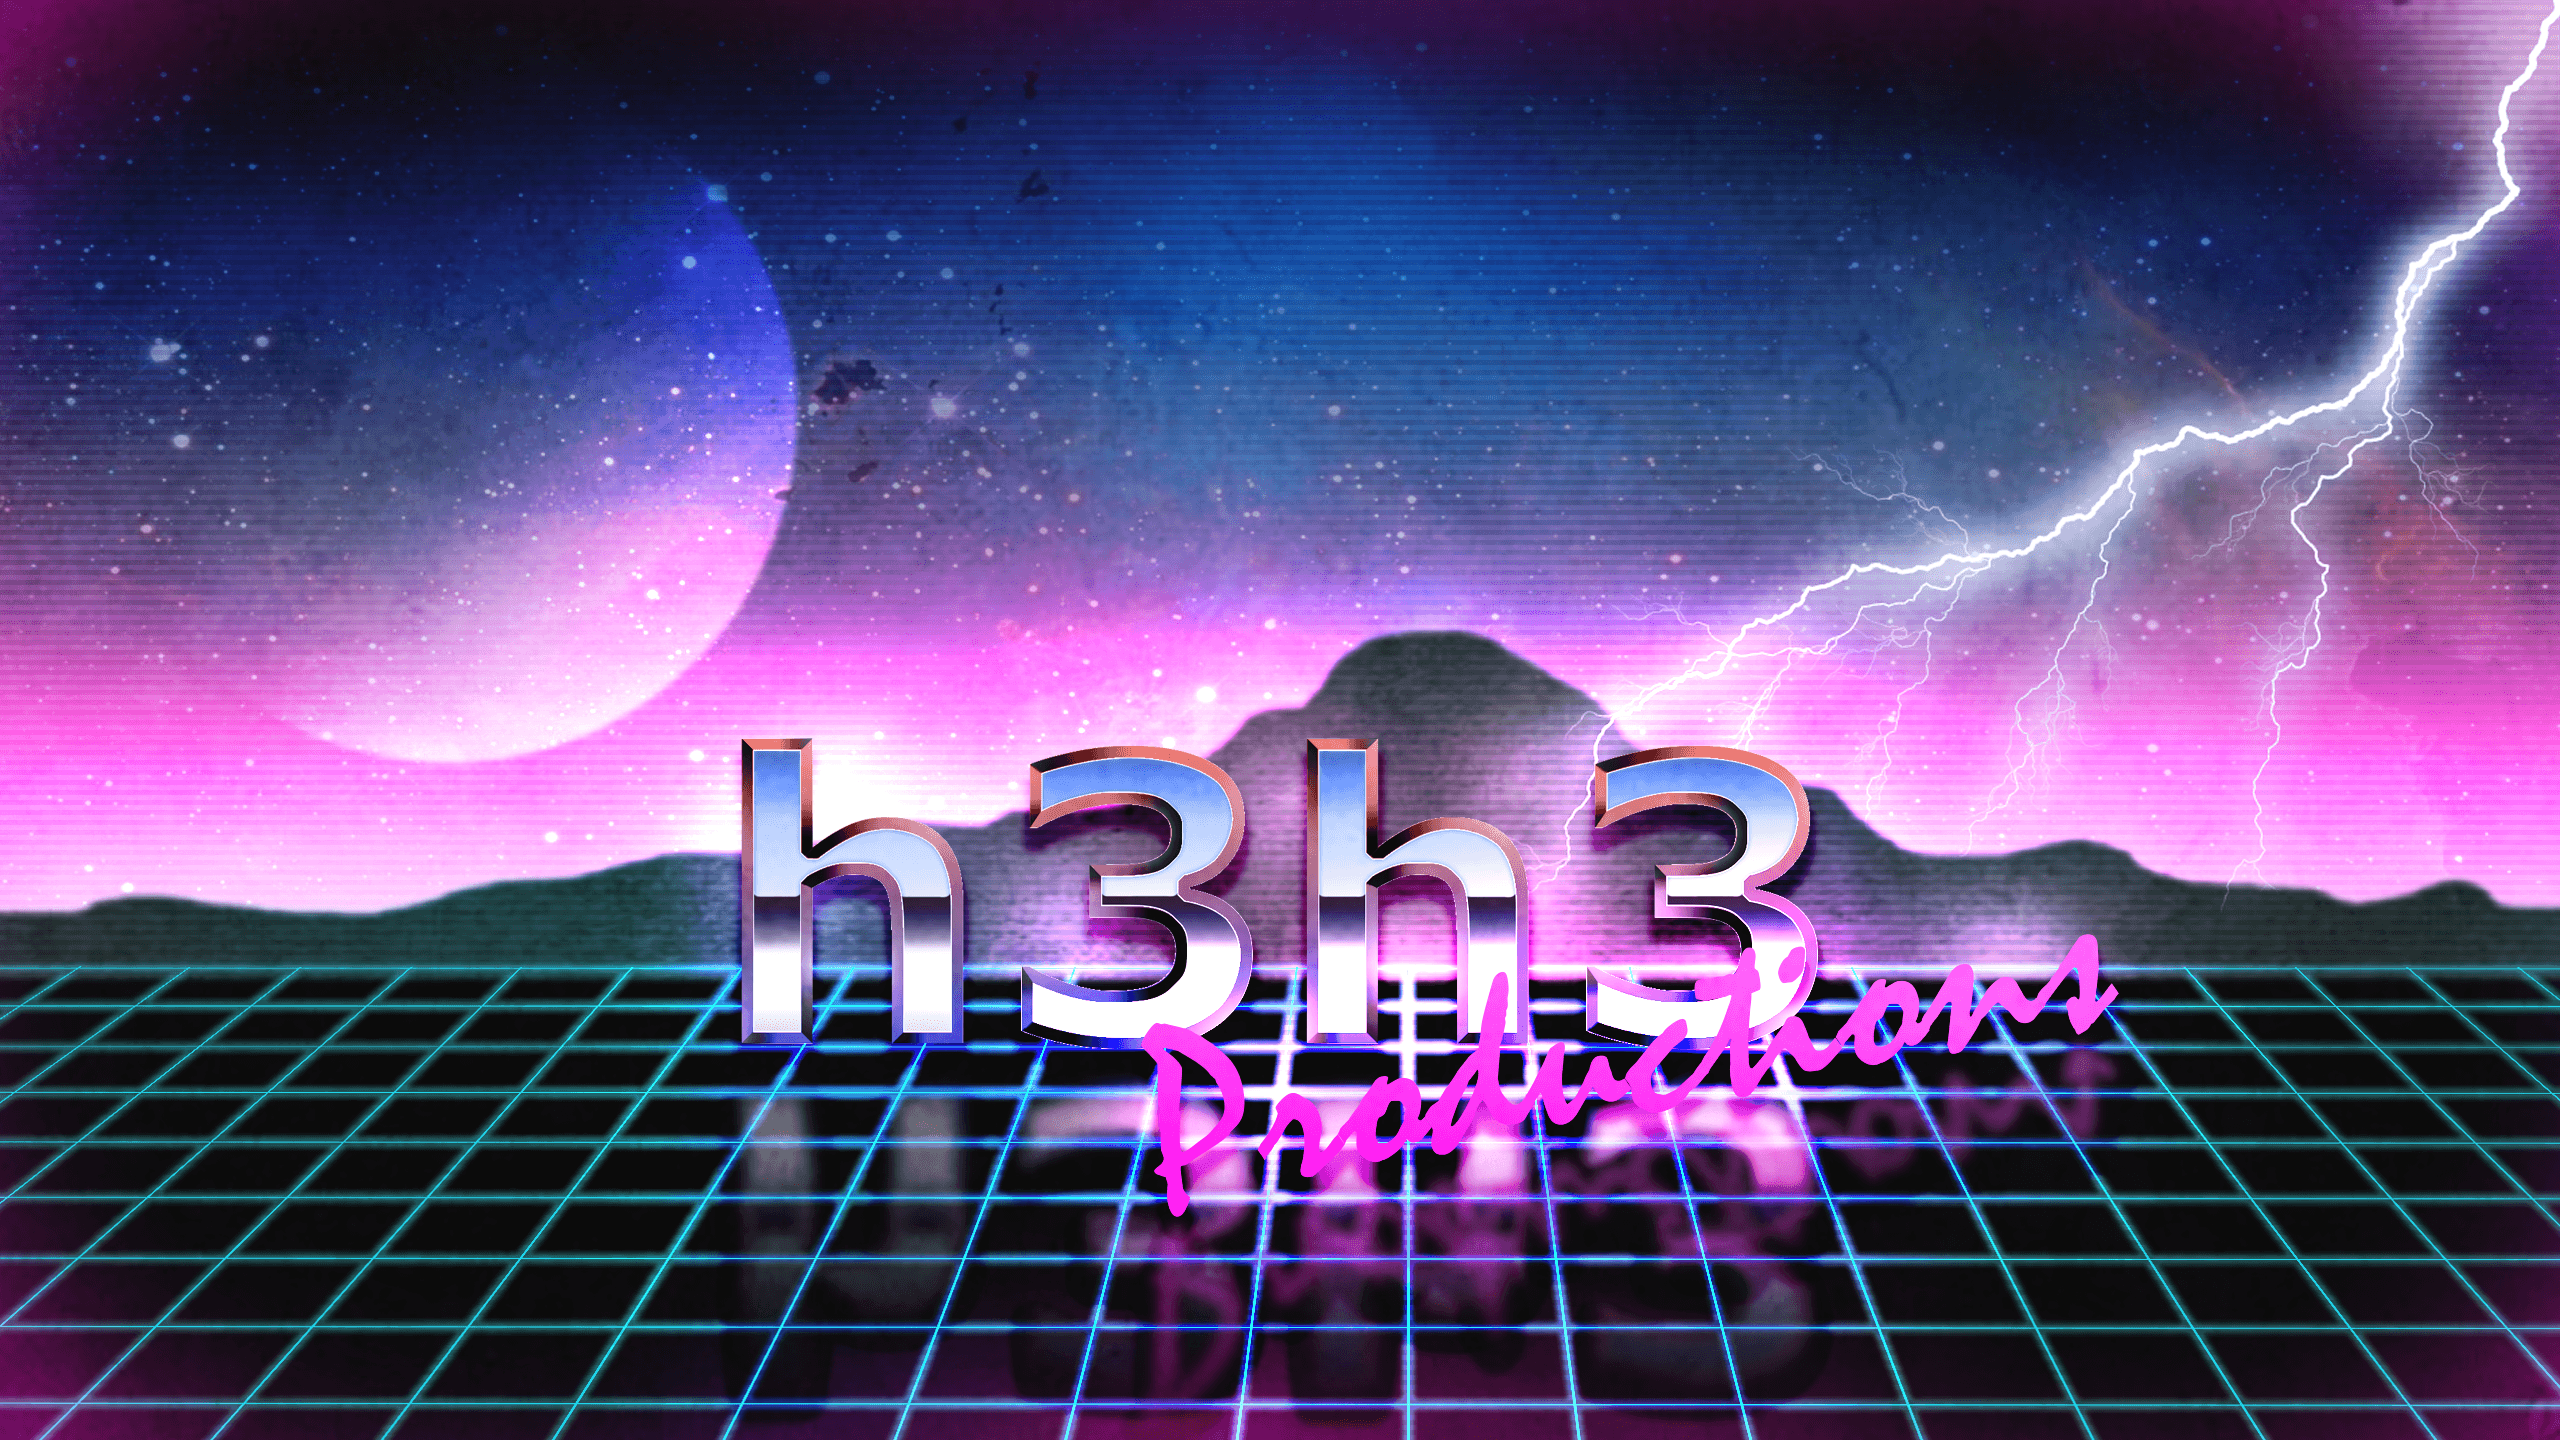 My h3h3 desktop wallpaper 1440p